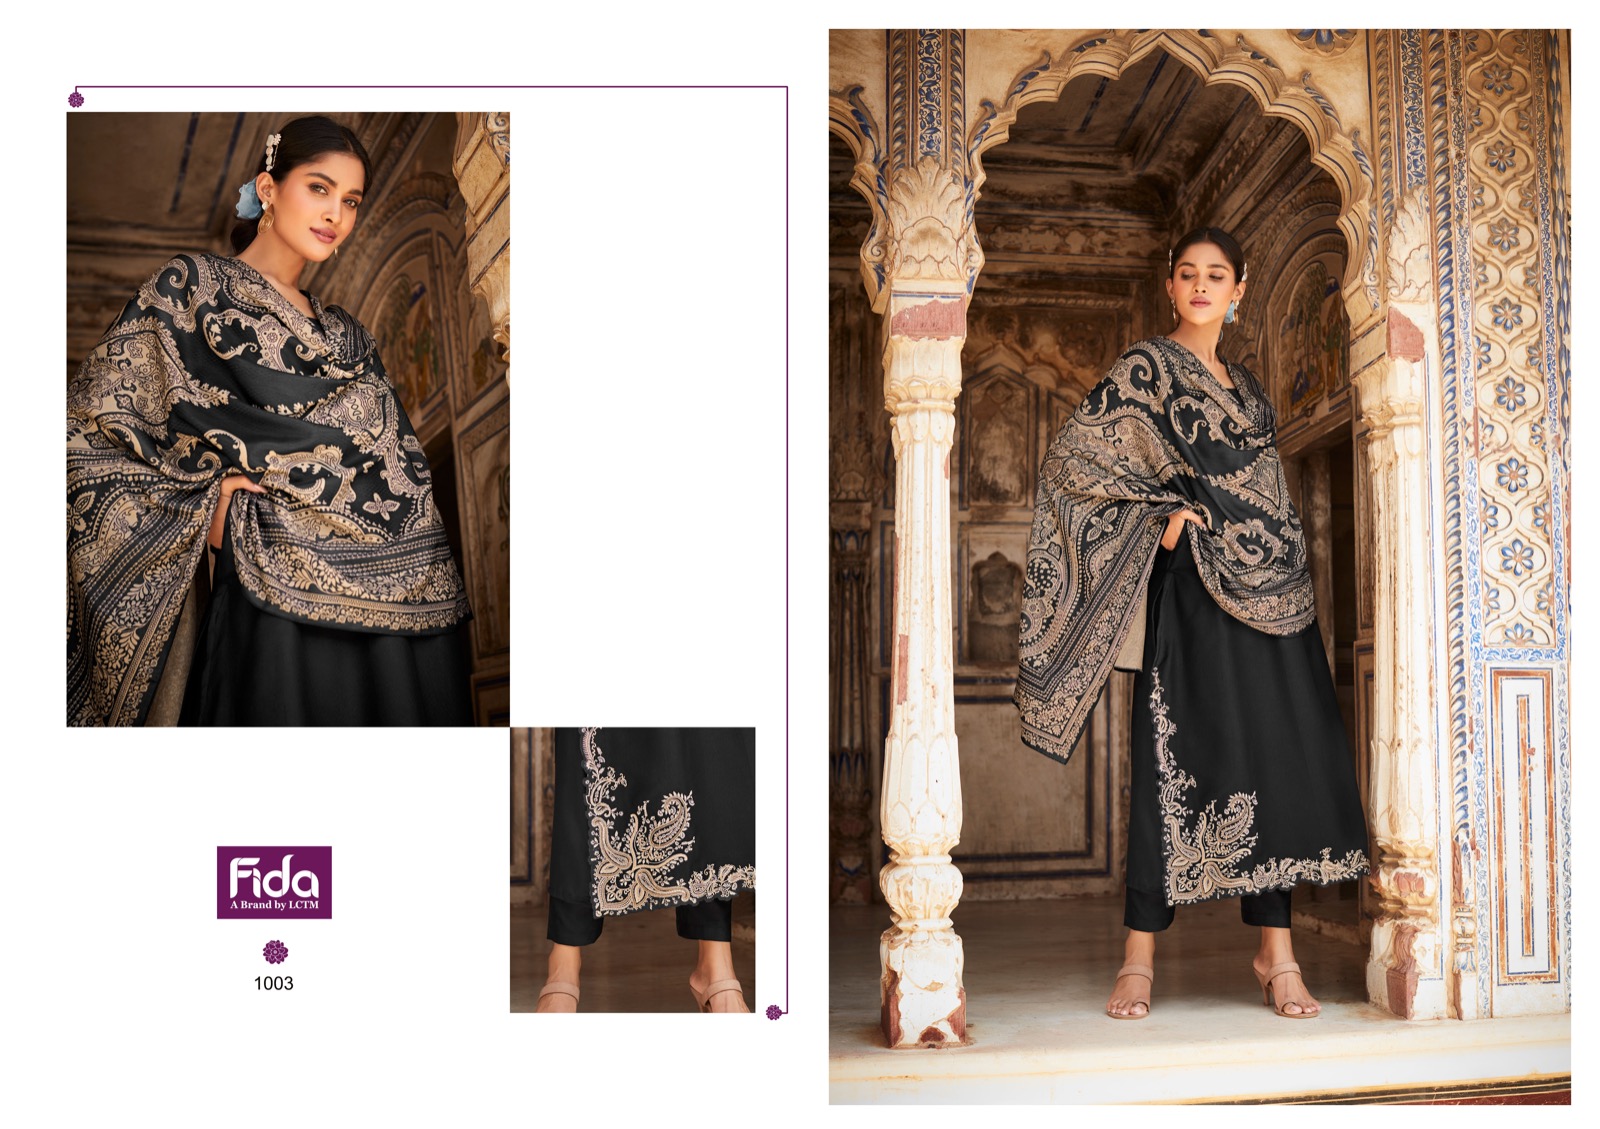 fida takshvi embroidery fancy decent look salwar suit catalog